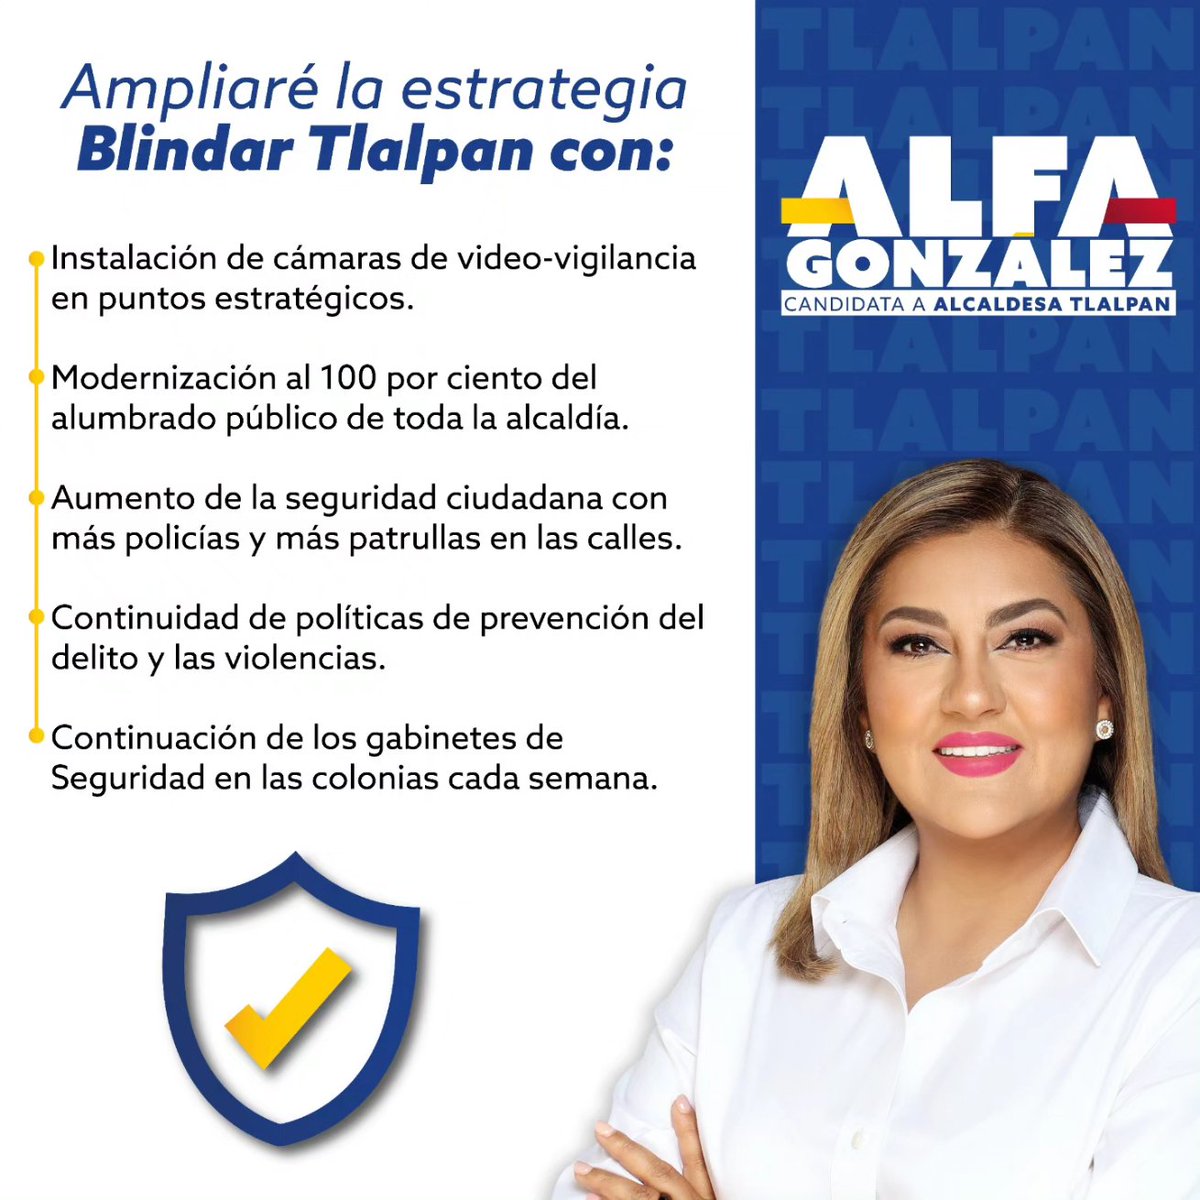 @alfagonzalezm Estamos contigo Alfa!!!!